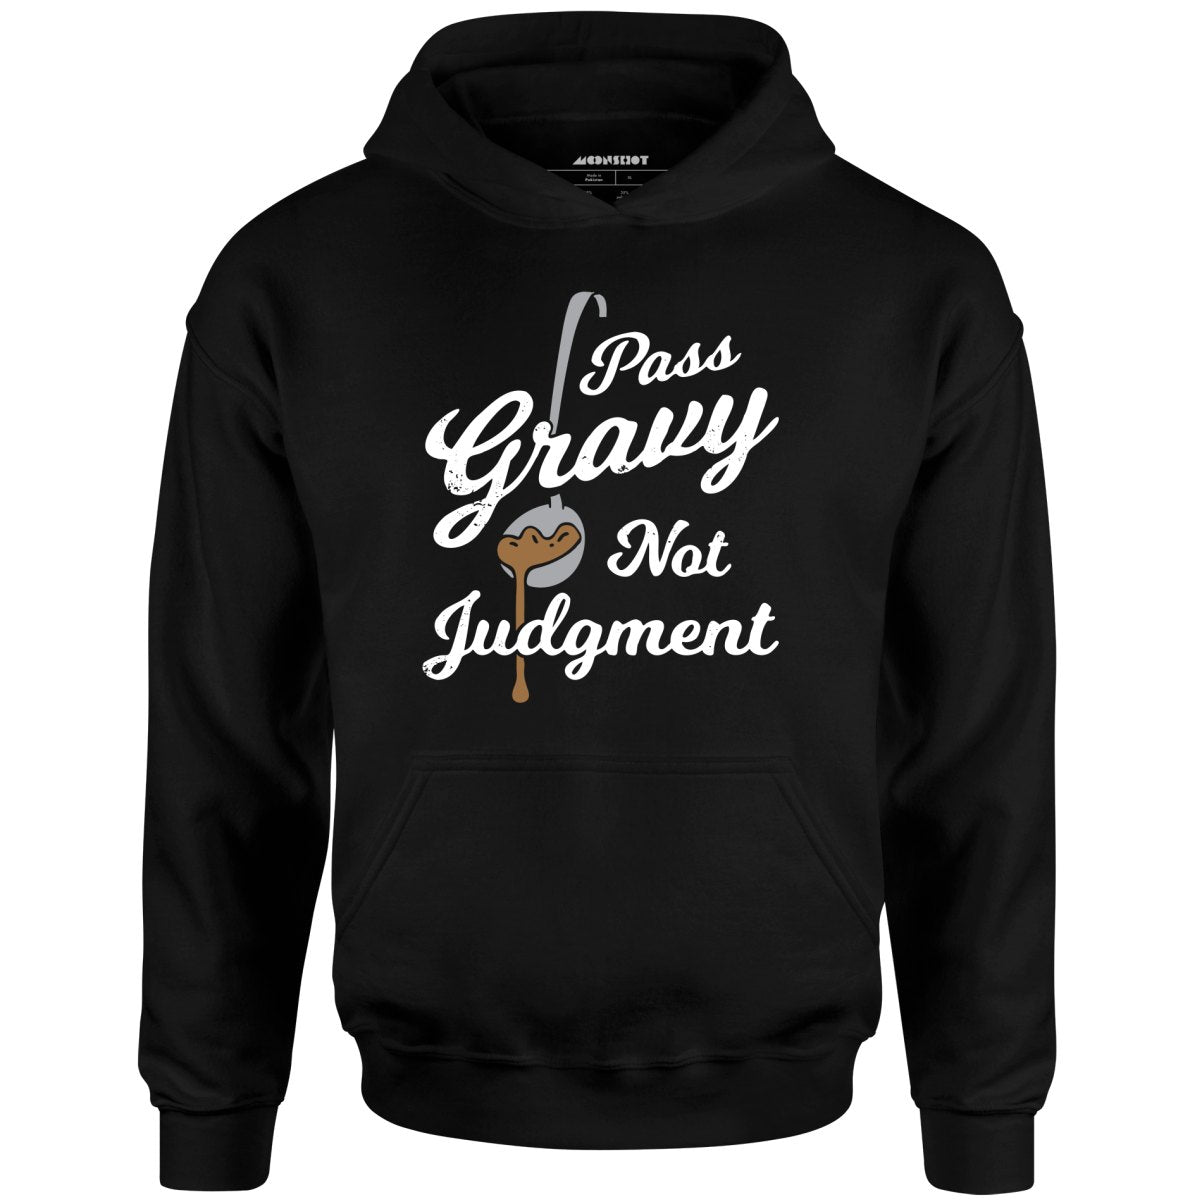 Pass Gravy Not Judgment - Unisex Hoodie